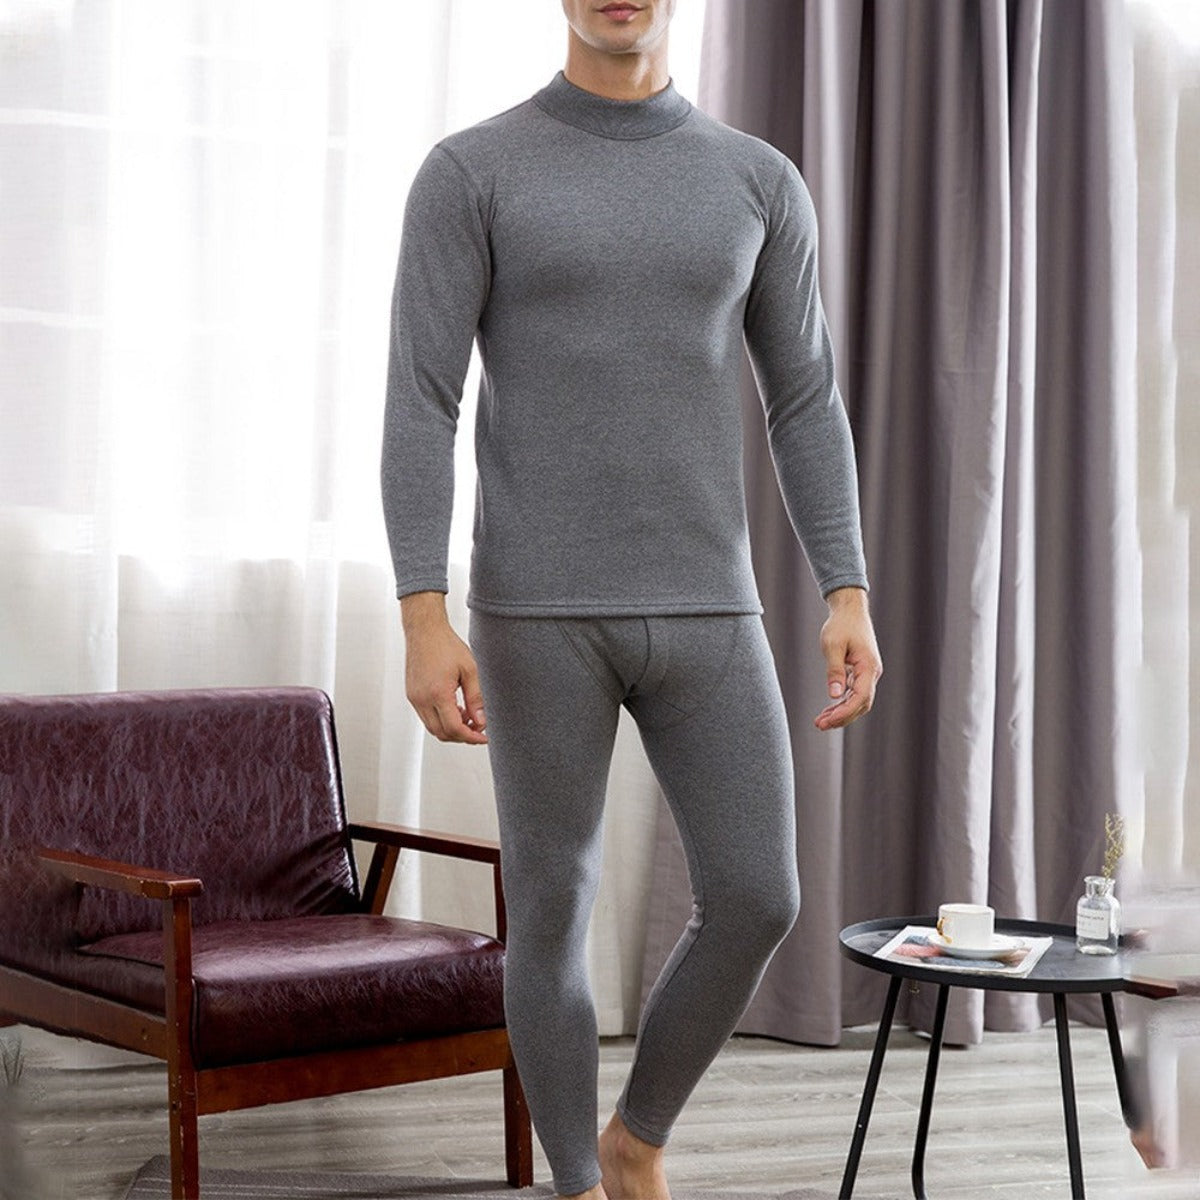 Men's Soft Winter Thermal Underwear - Light Gray